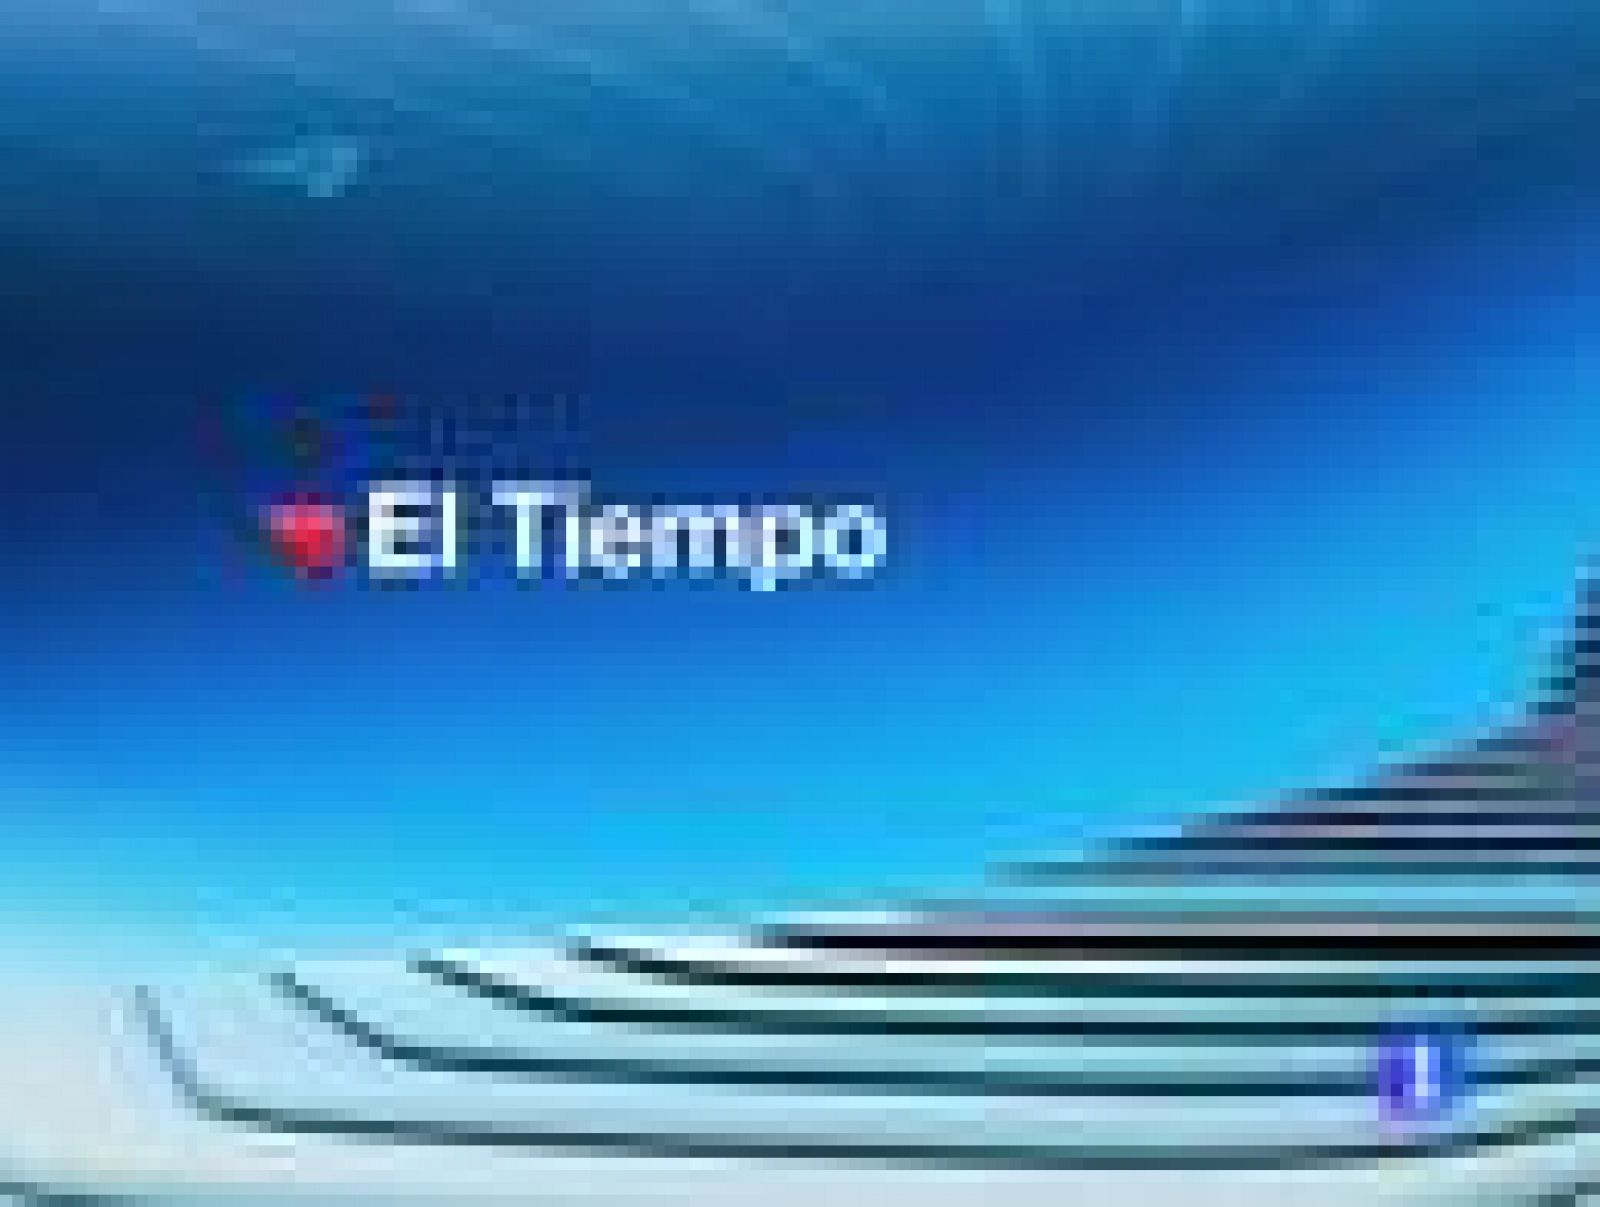 Informativo Telerioja: El tiempo en La Rioja - 08/08/13 | RTVE Play